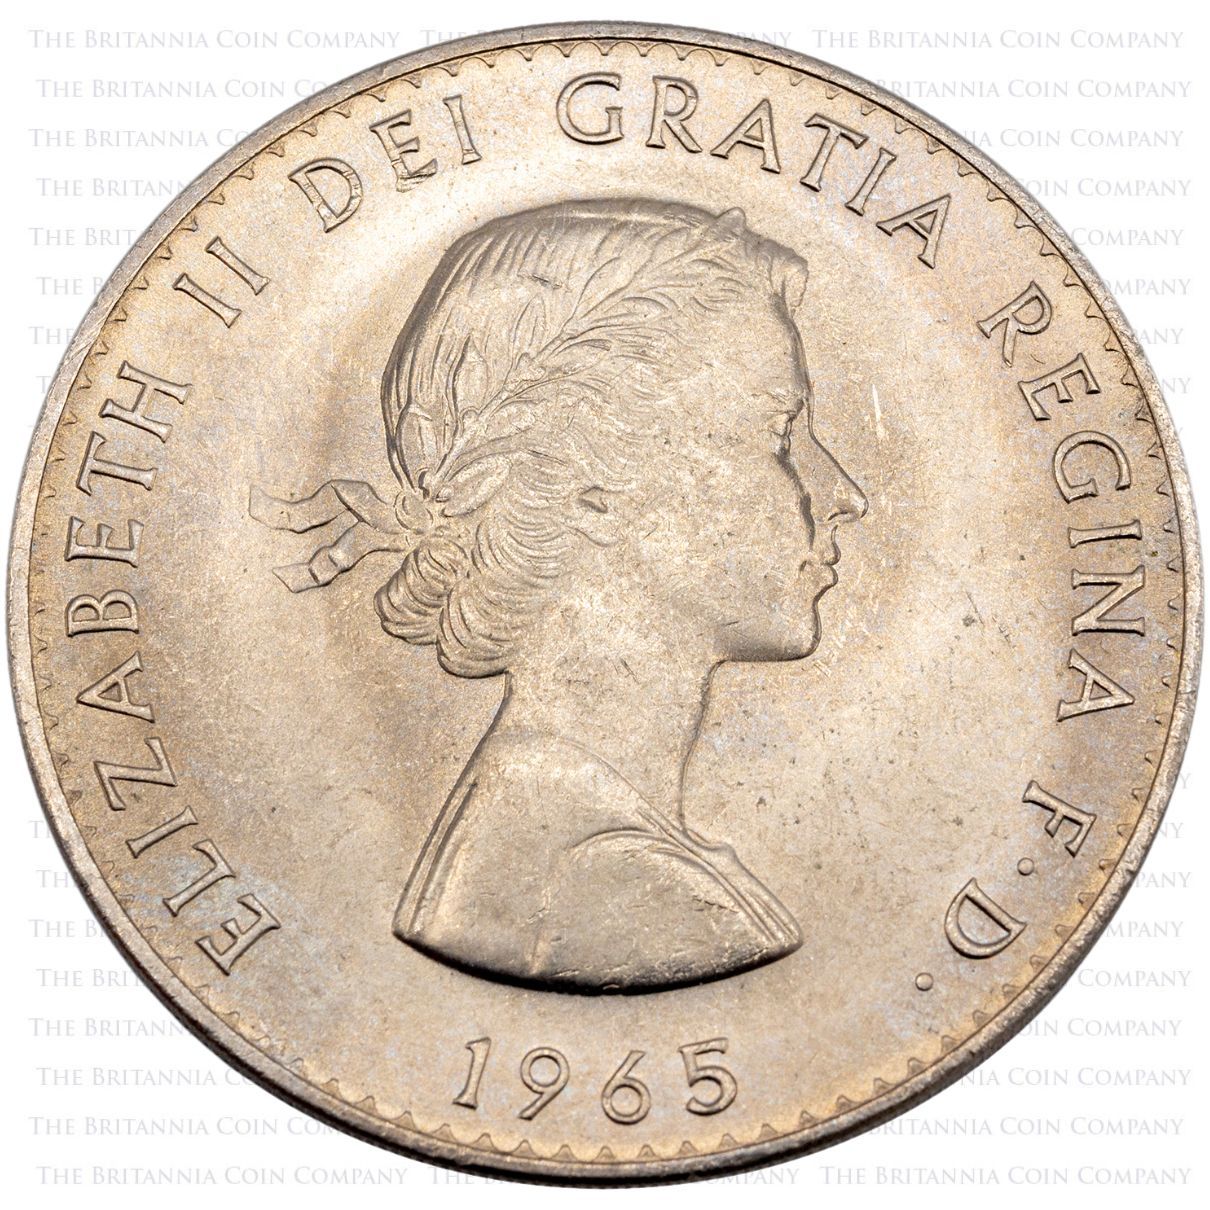 1965 Crown Sir Winston Churchill Queen Elizabeth II Coin Reverse